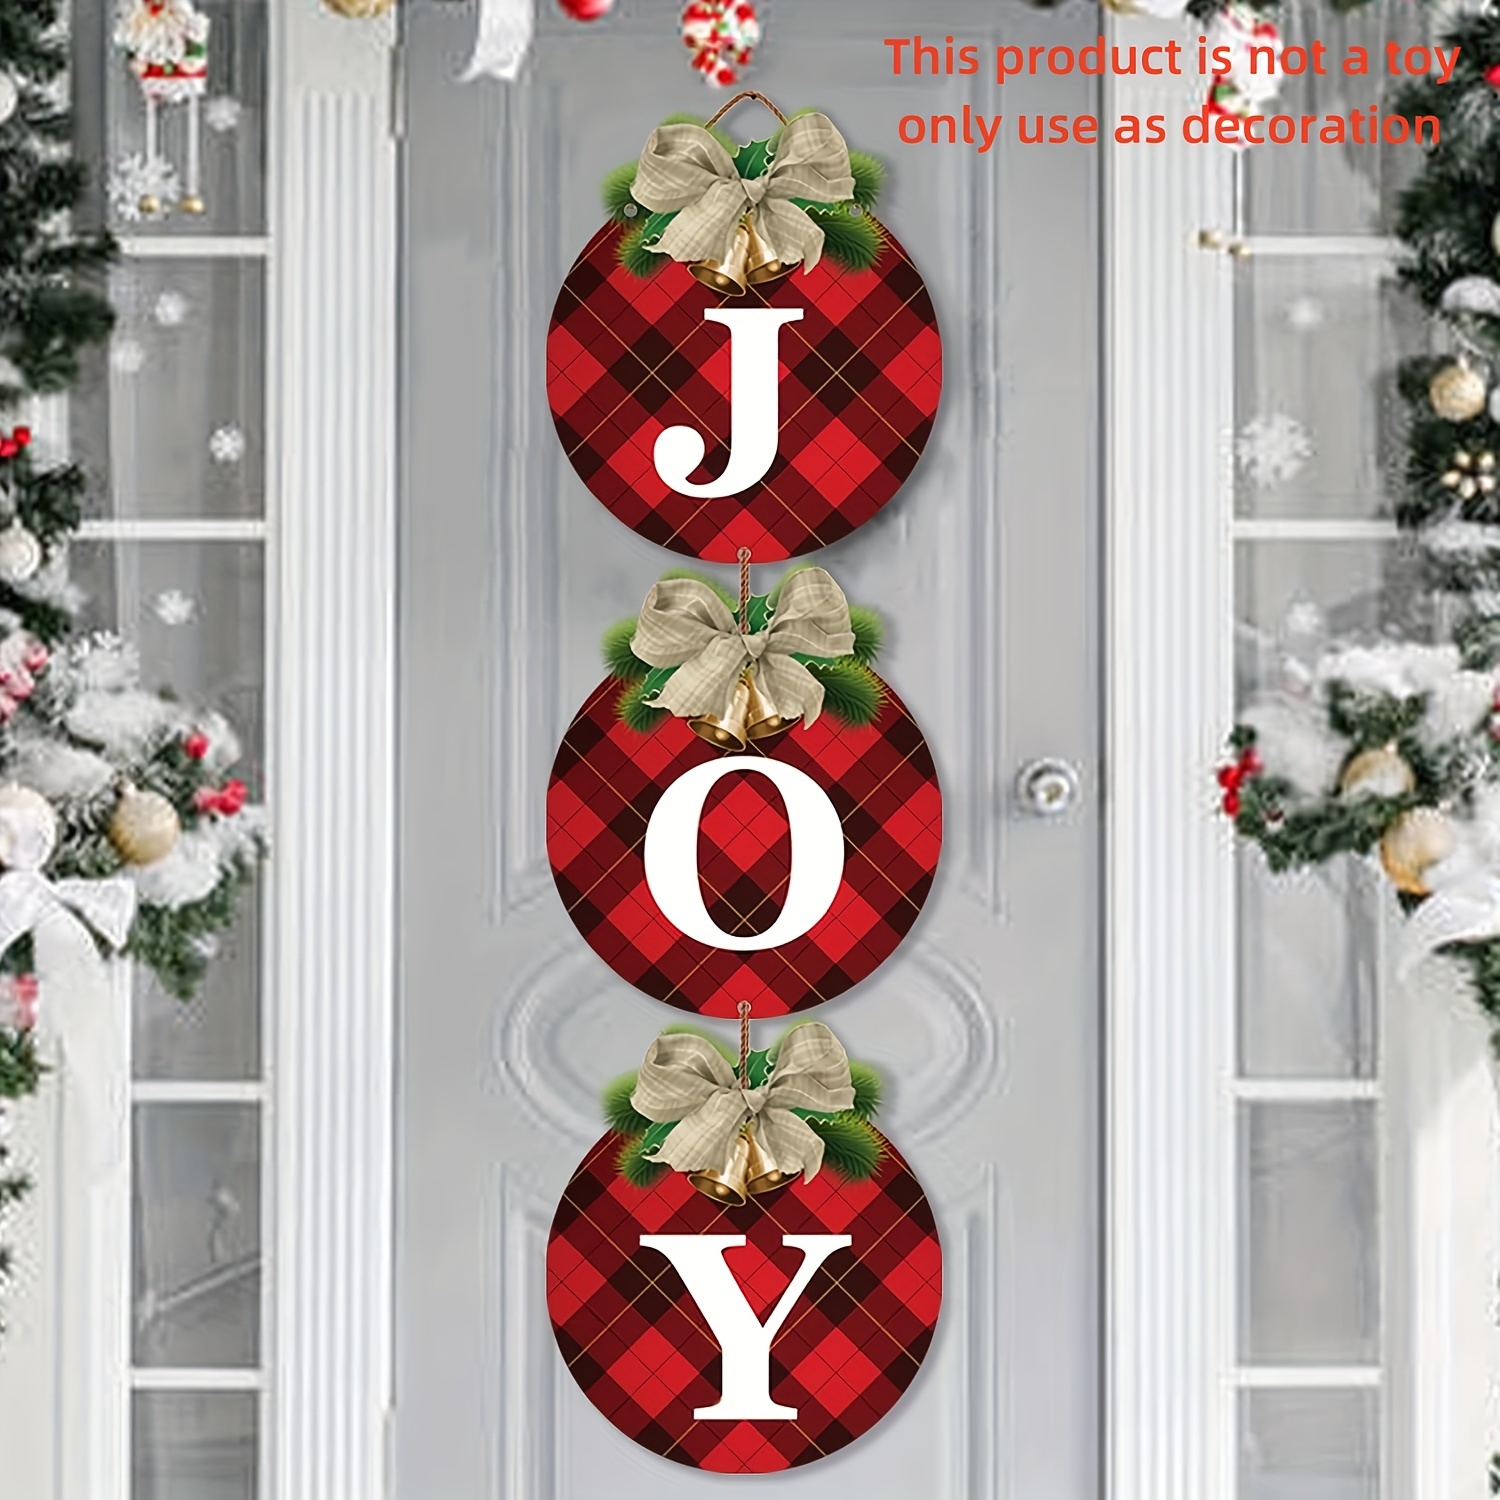 

3pcs, Christmas Pendant, Buffalo Plaid Christmas Wreaths For Front Door - Rustic Christmas Decor Joy Signs For Holiday Xmas Garage Door Wall Decorations Indoor Outdoor Decor